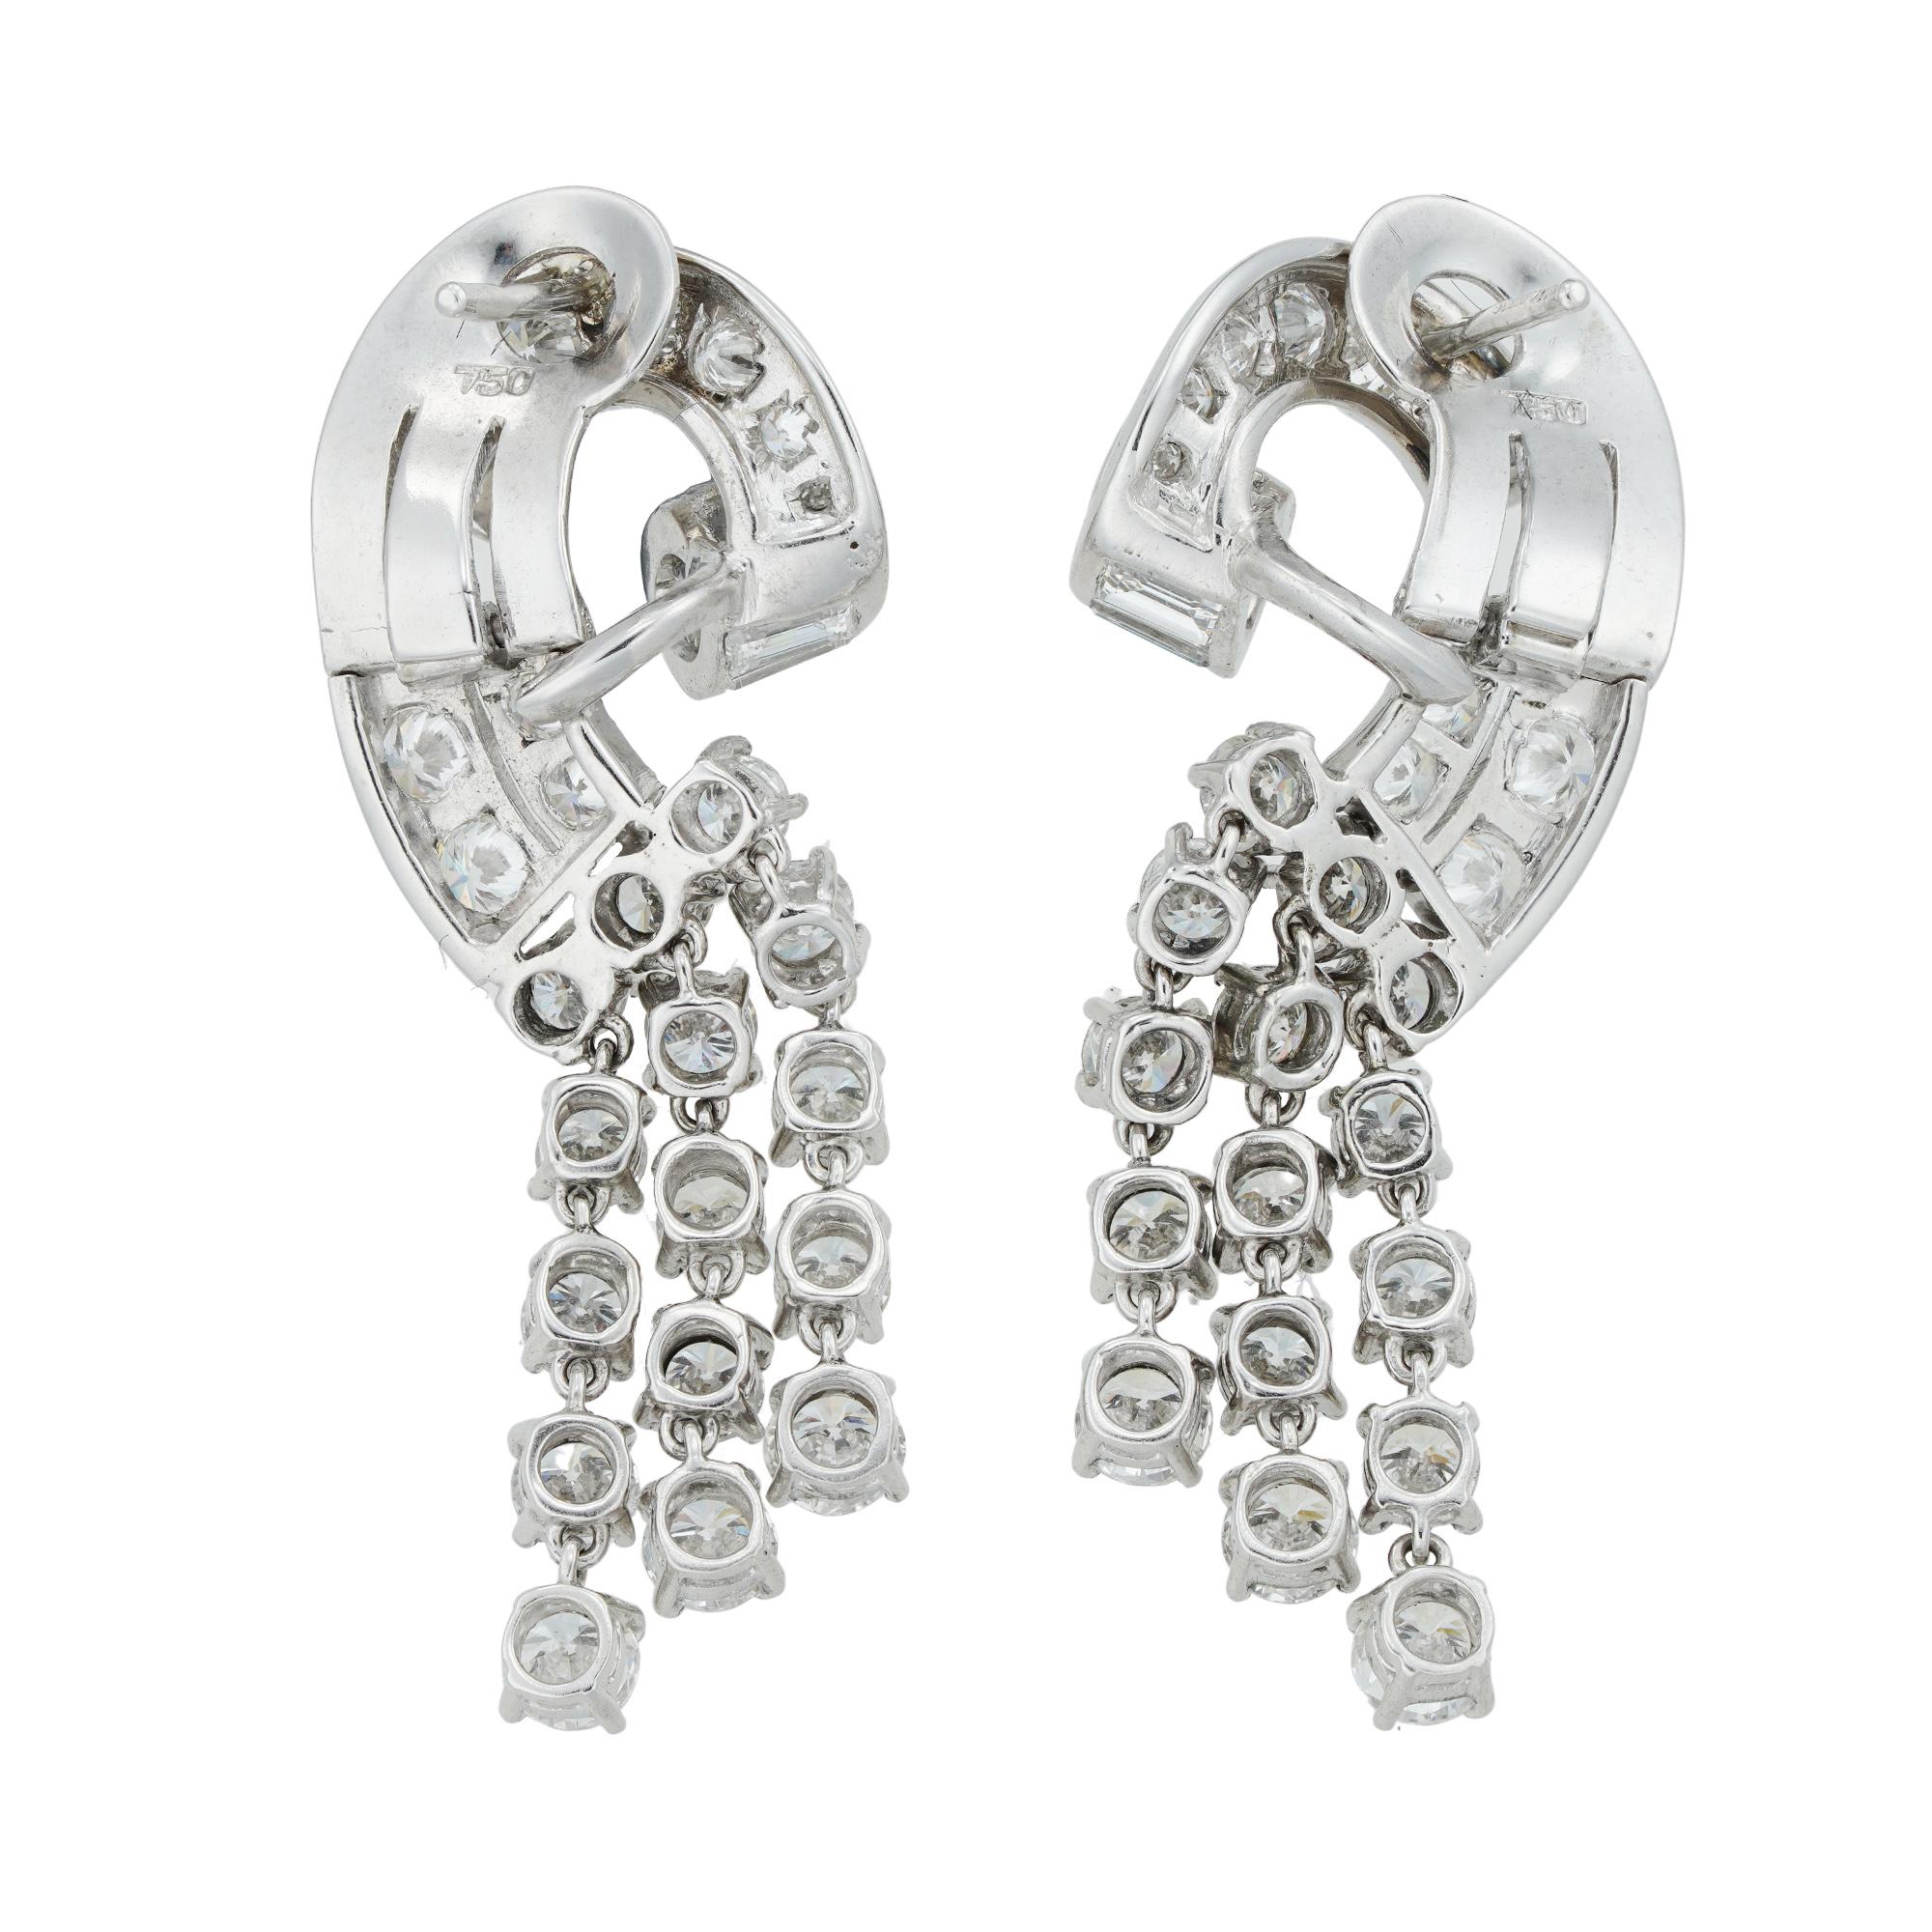 vintage diamond drop earrings